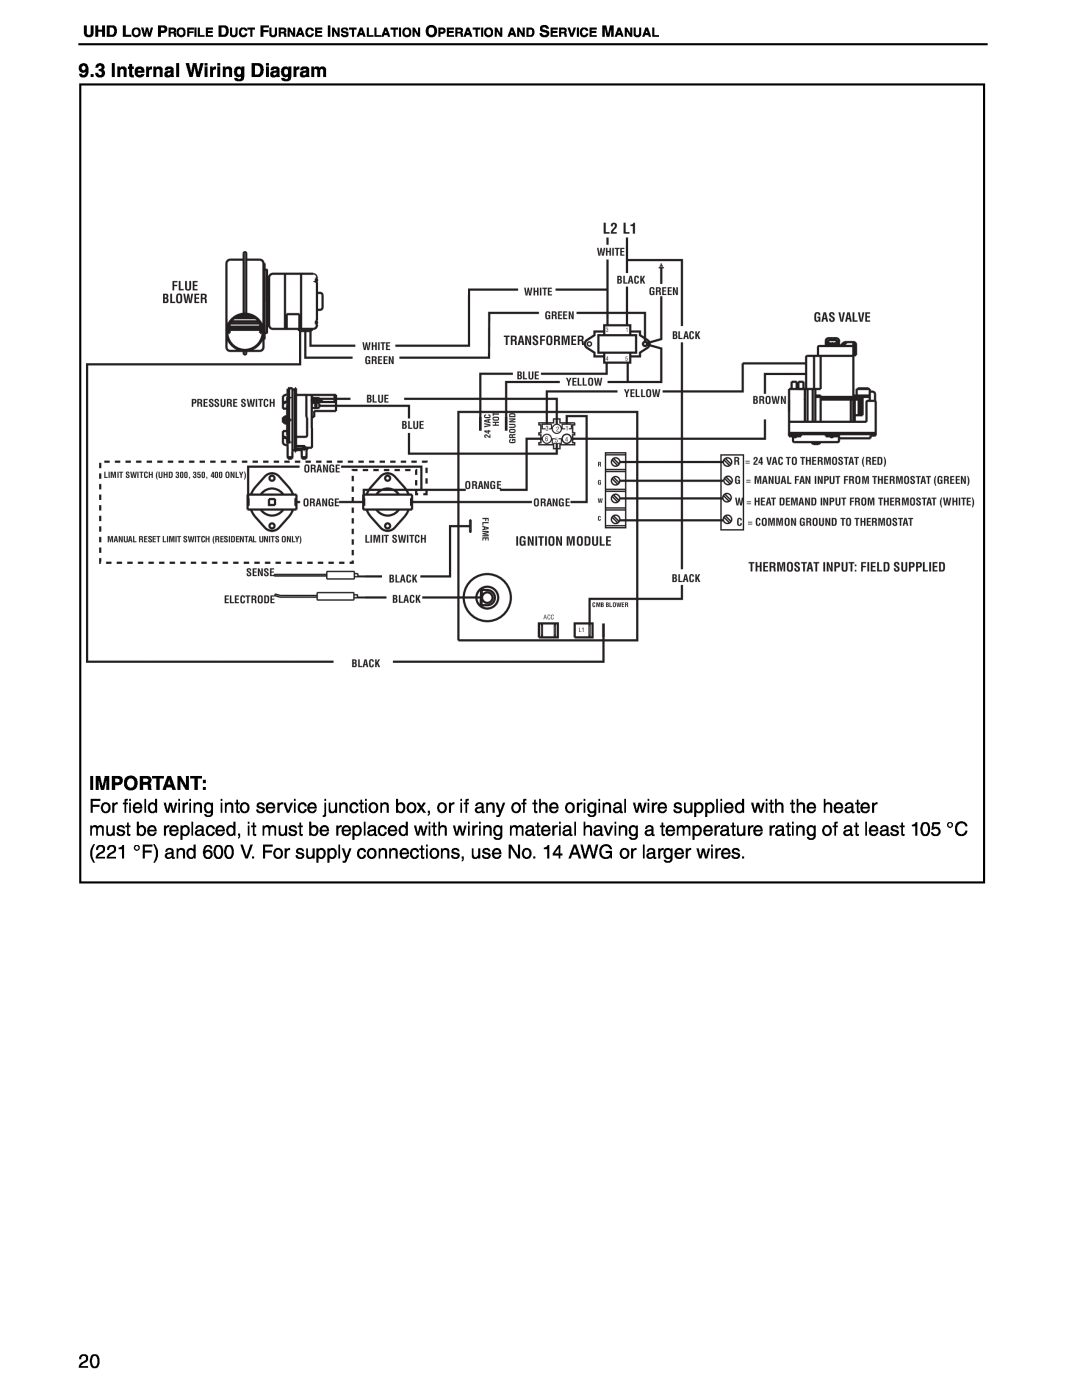 Roberts Gorden UHD[X][S][R] 75, UHD[X][S][R] 125 service manual Internal Wiring Diagram 